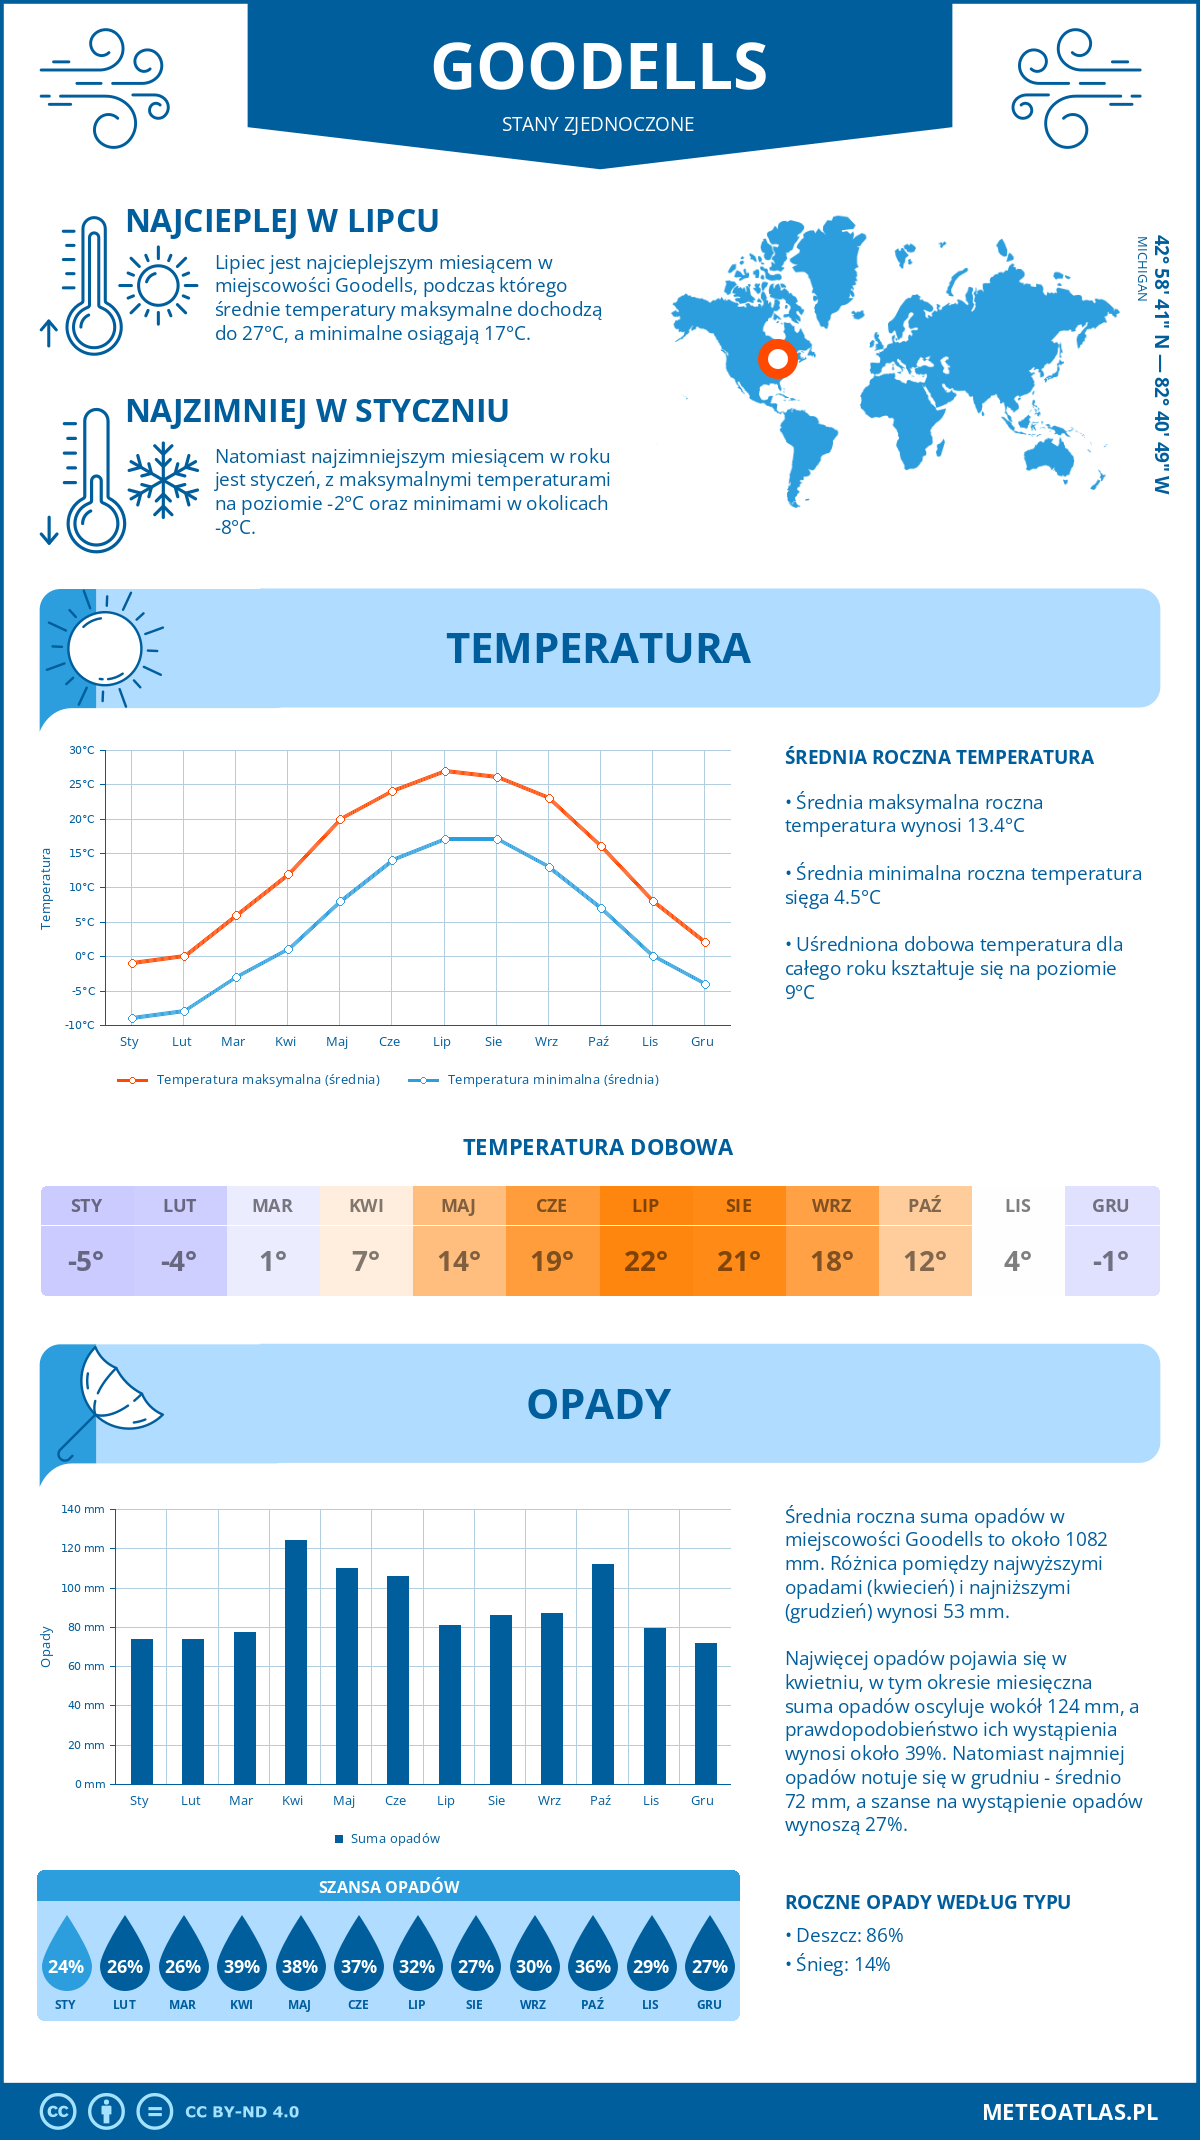 Pogoda Goodells (Stany Zjednoczone). Temperatura oraz opady.